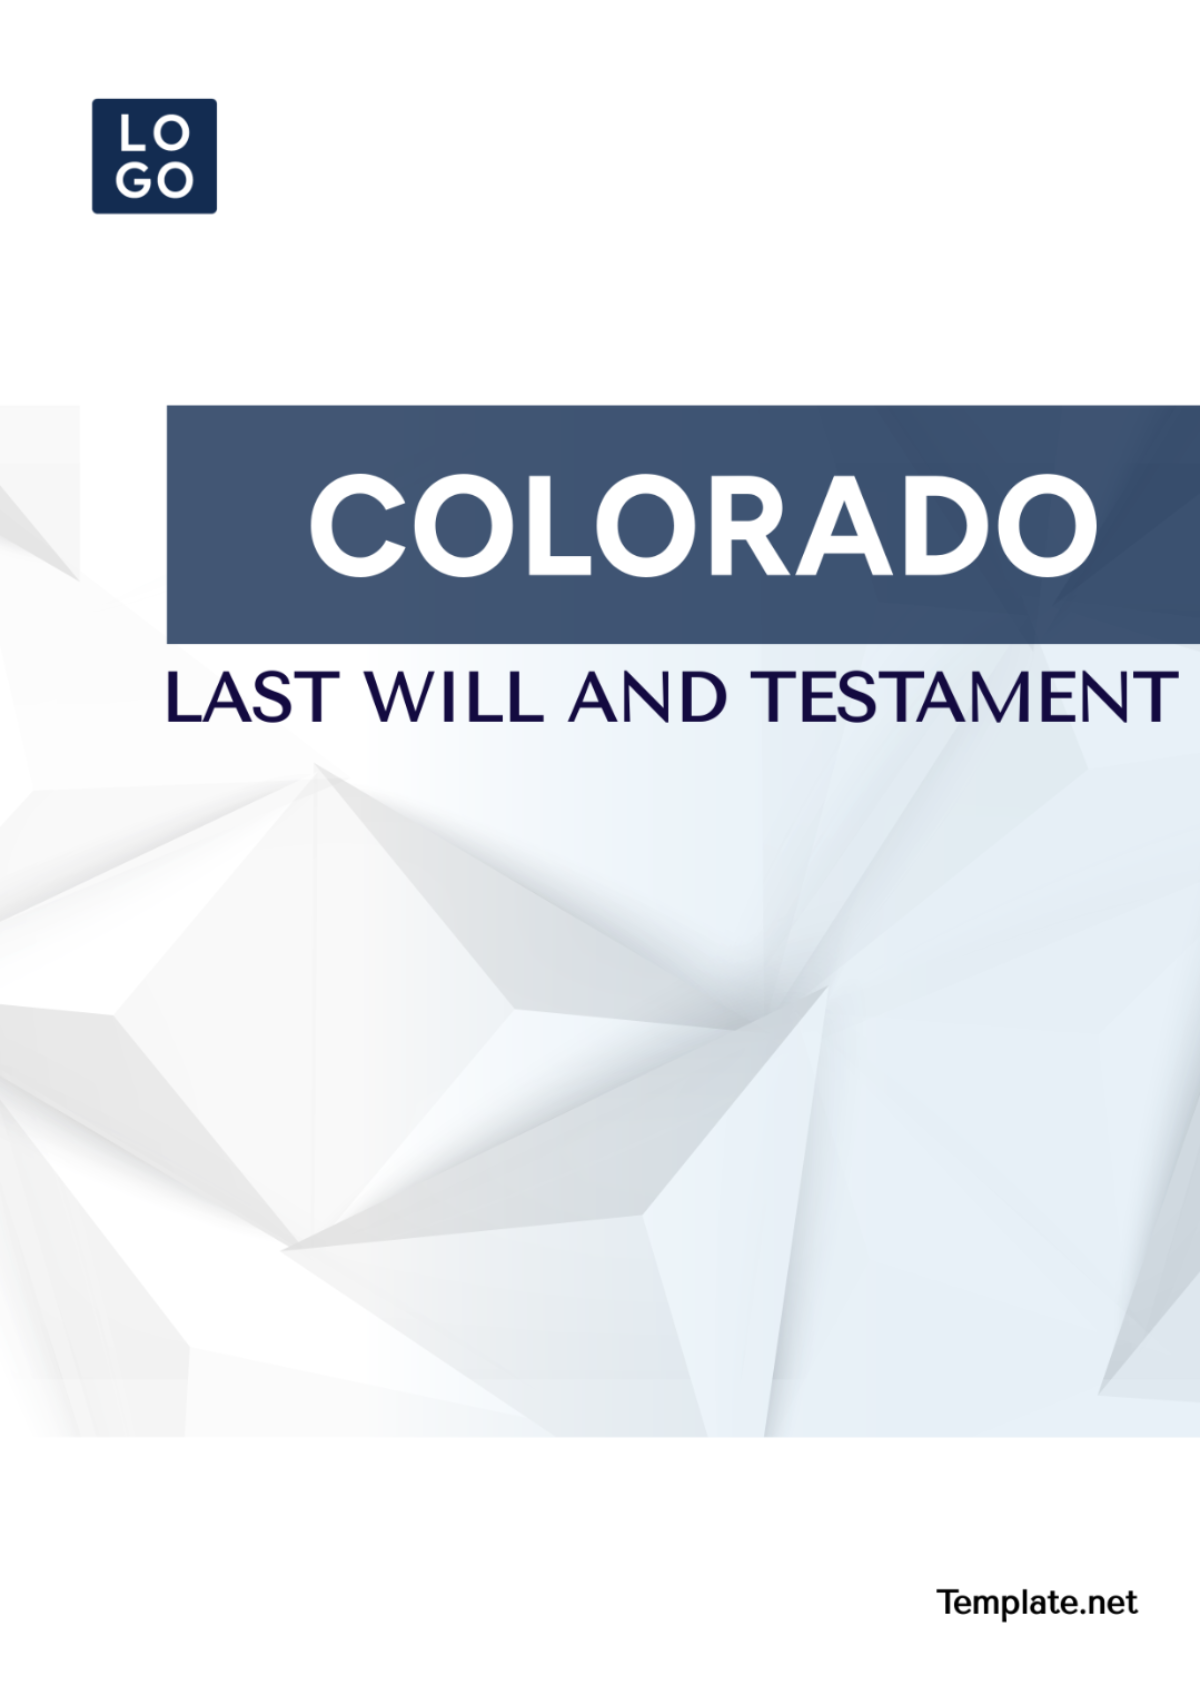 Colorado Last Will and Testament Template